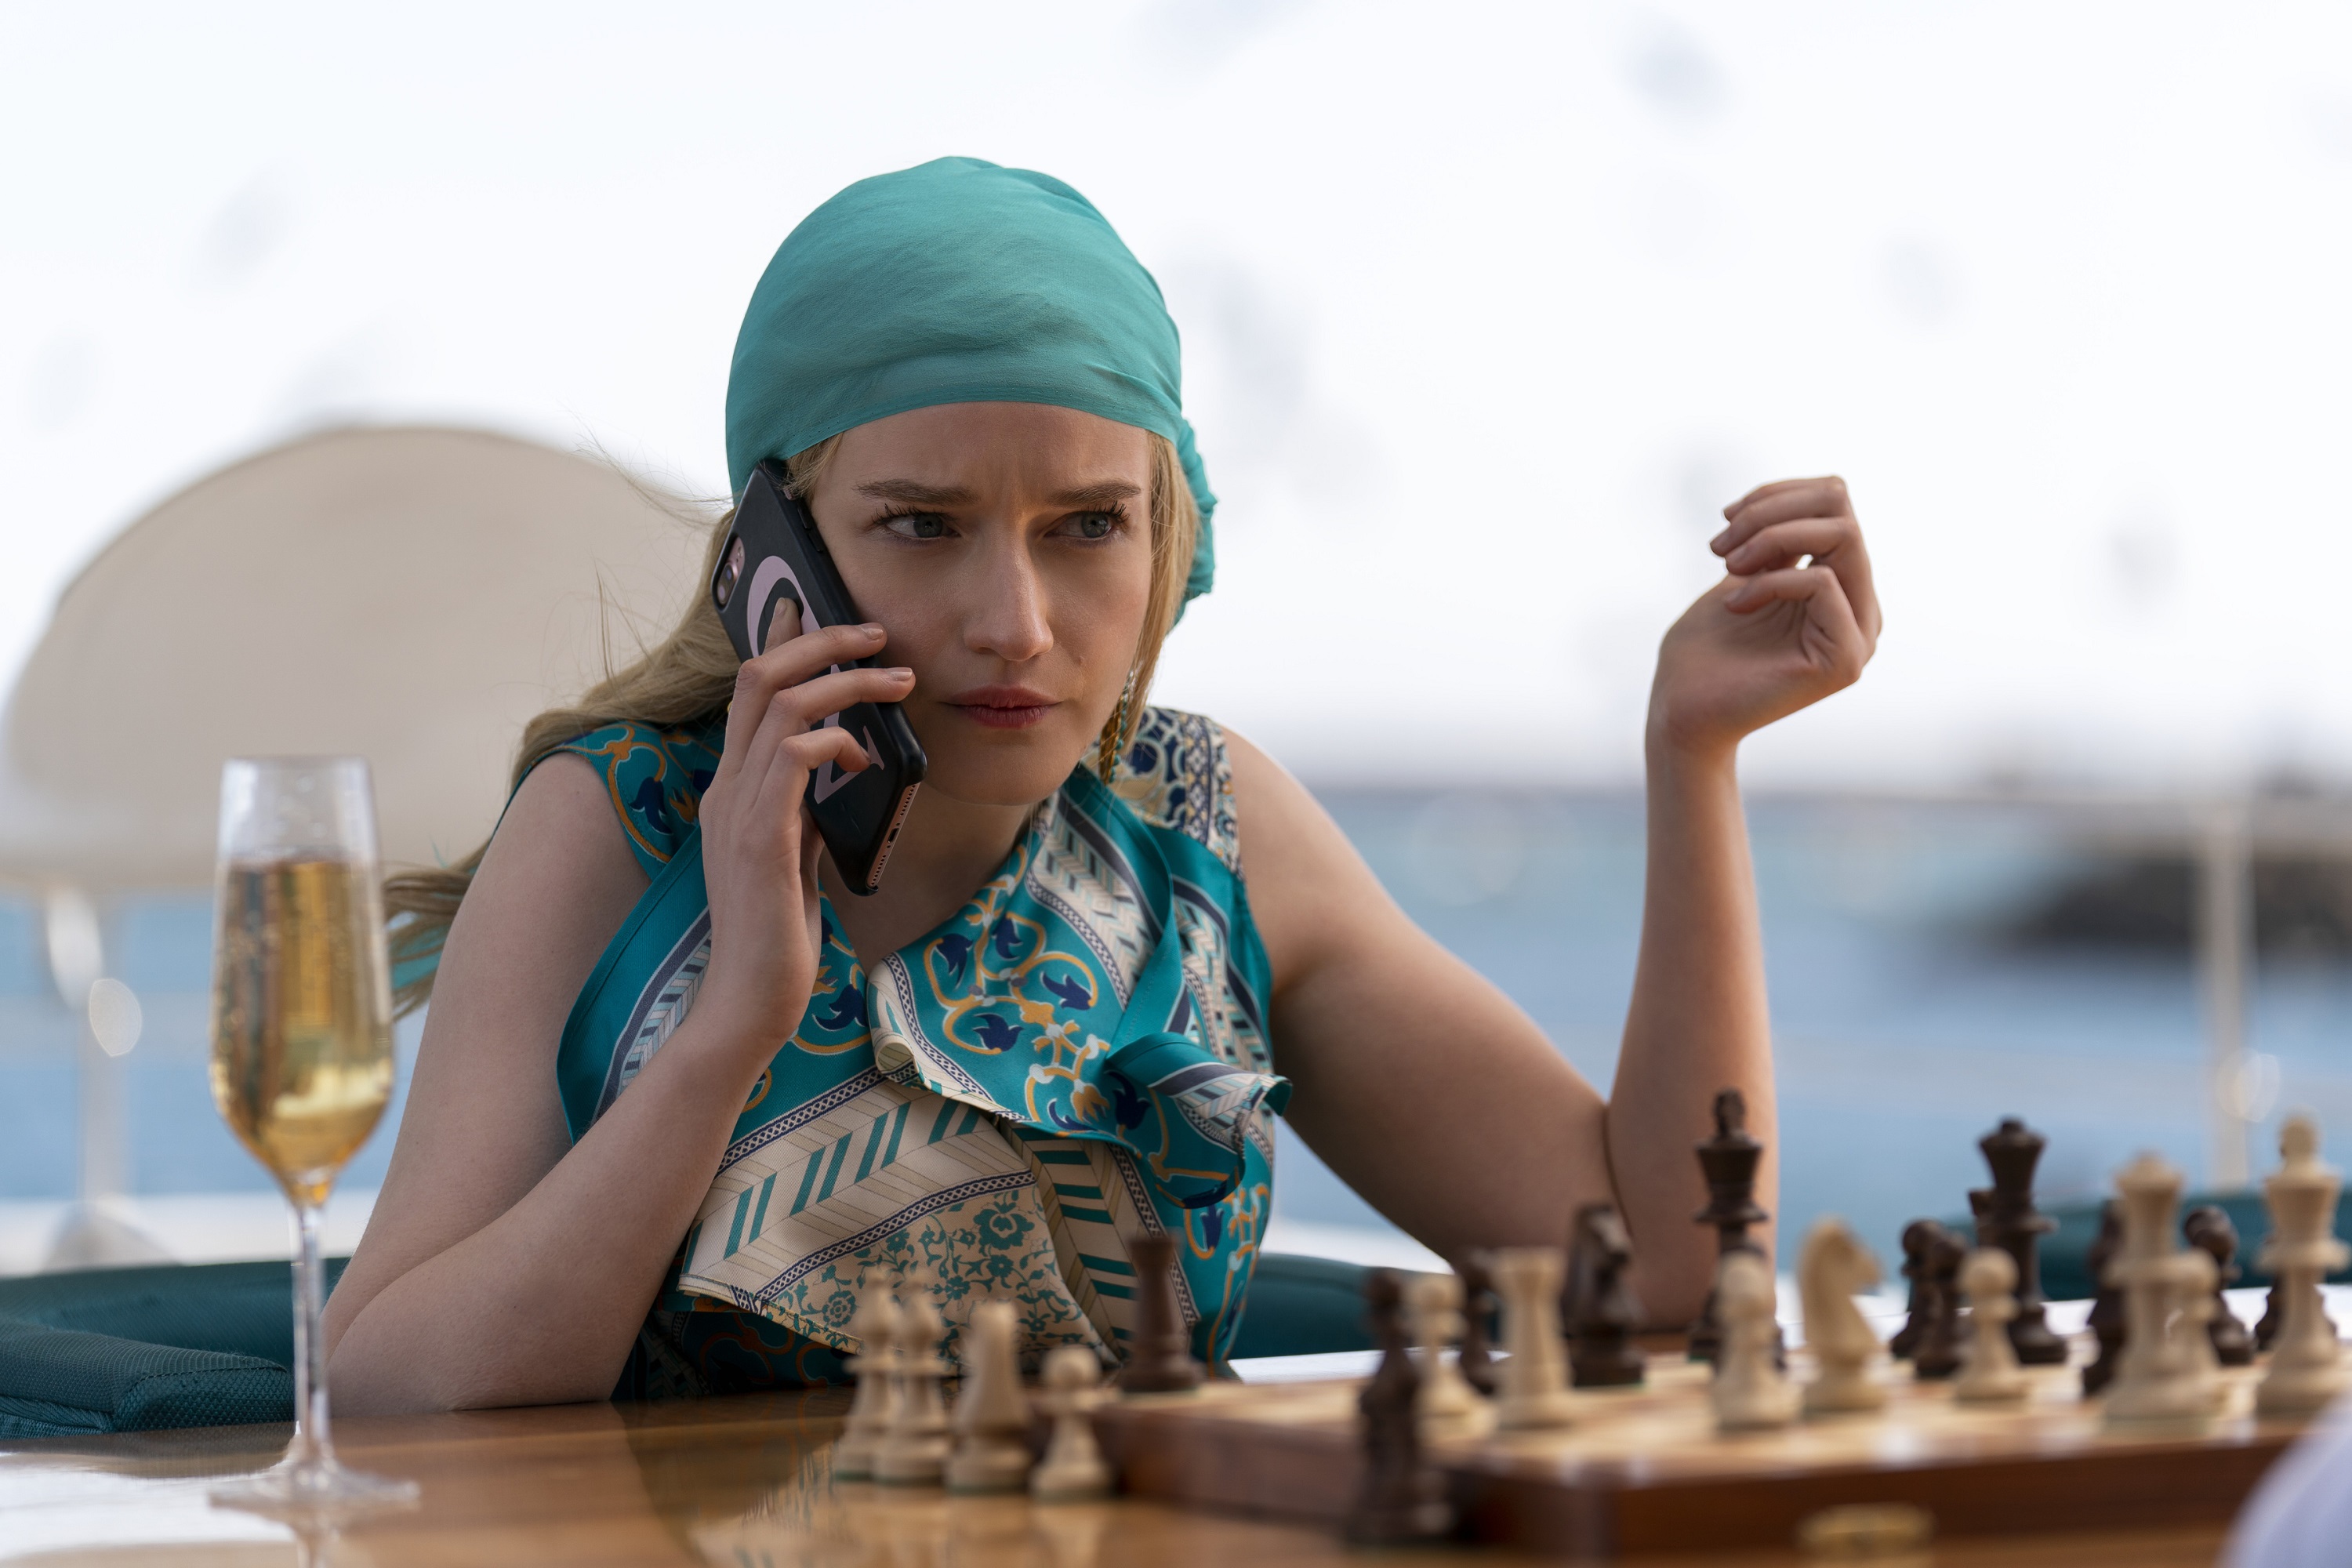 'Inventing Anna' cast member Julia Garner portrays Anna Sorokin on the phone